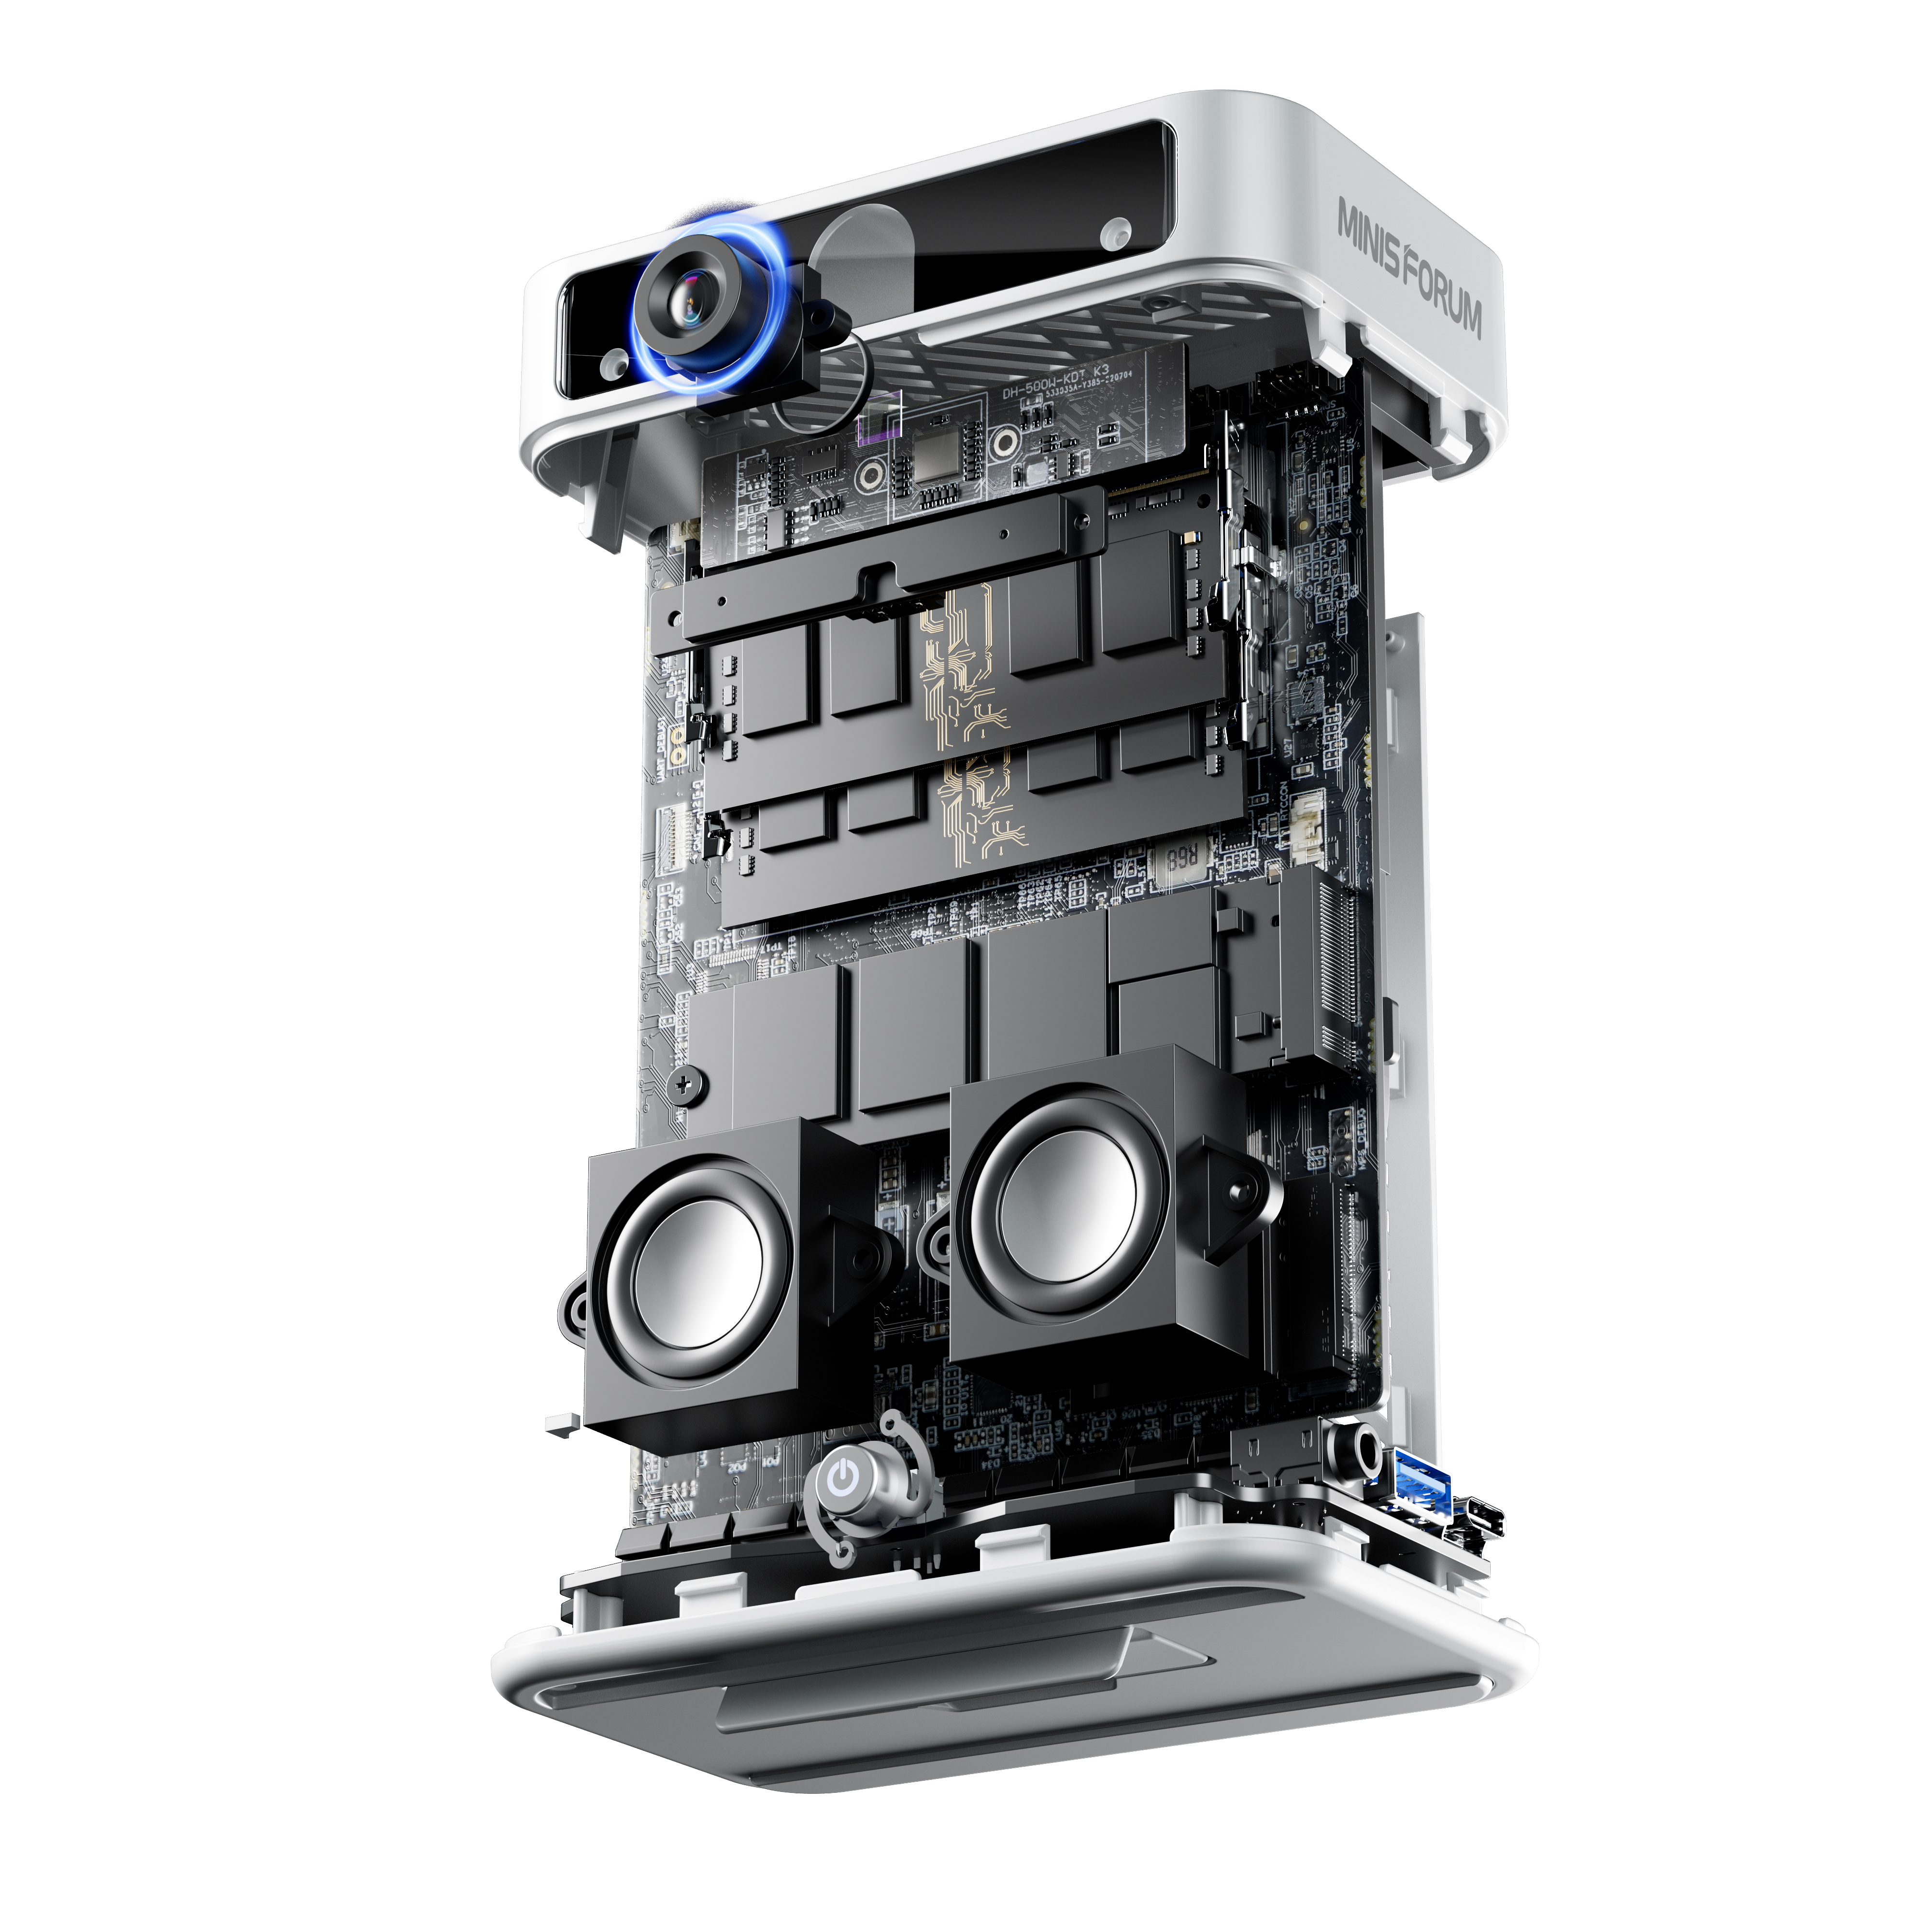 Beelink EQ12 debuts as new Intel Alder Lake-N mini-PC from US$239 -   News